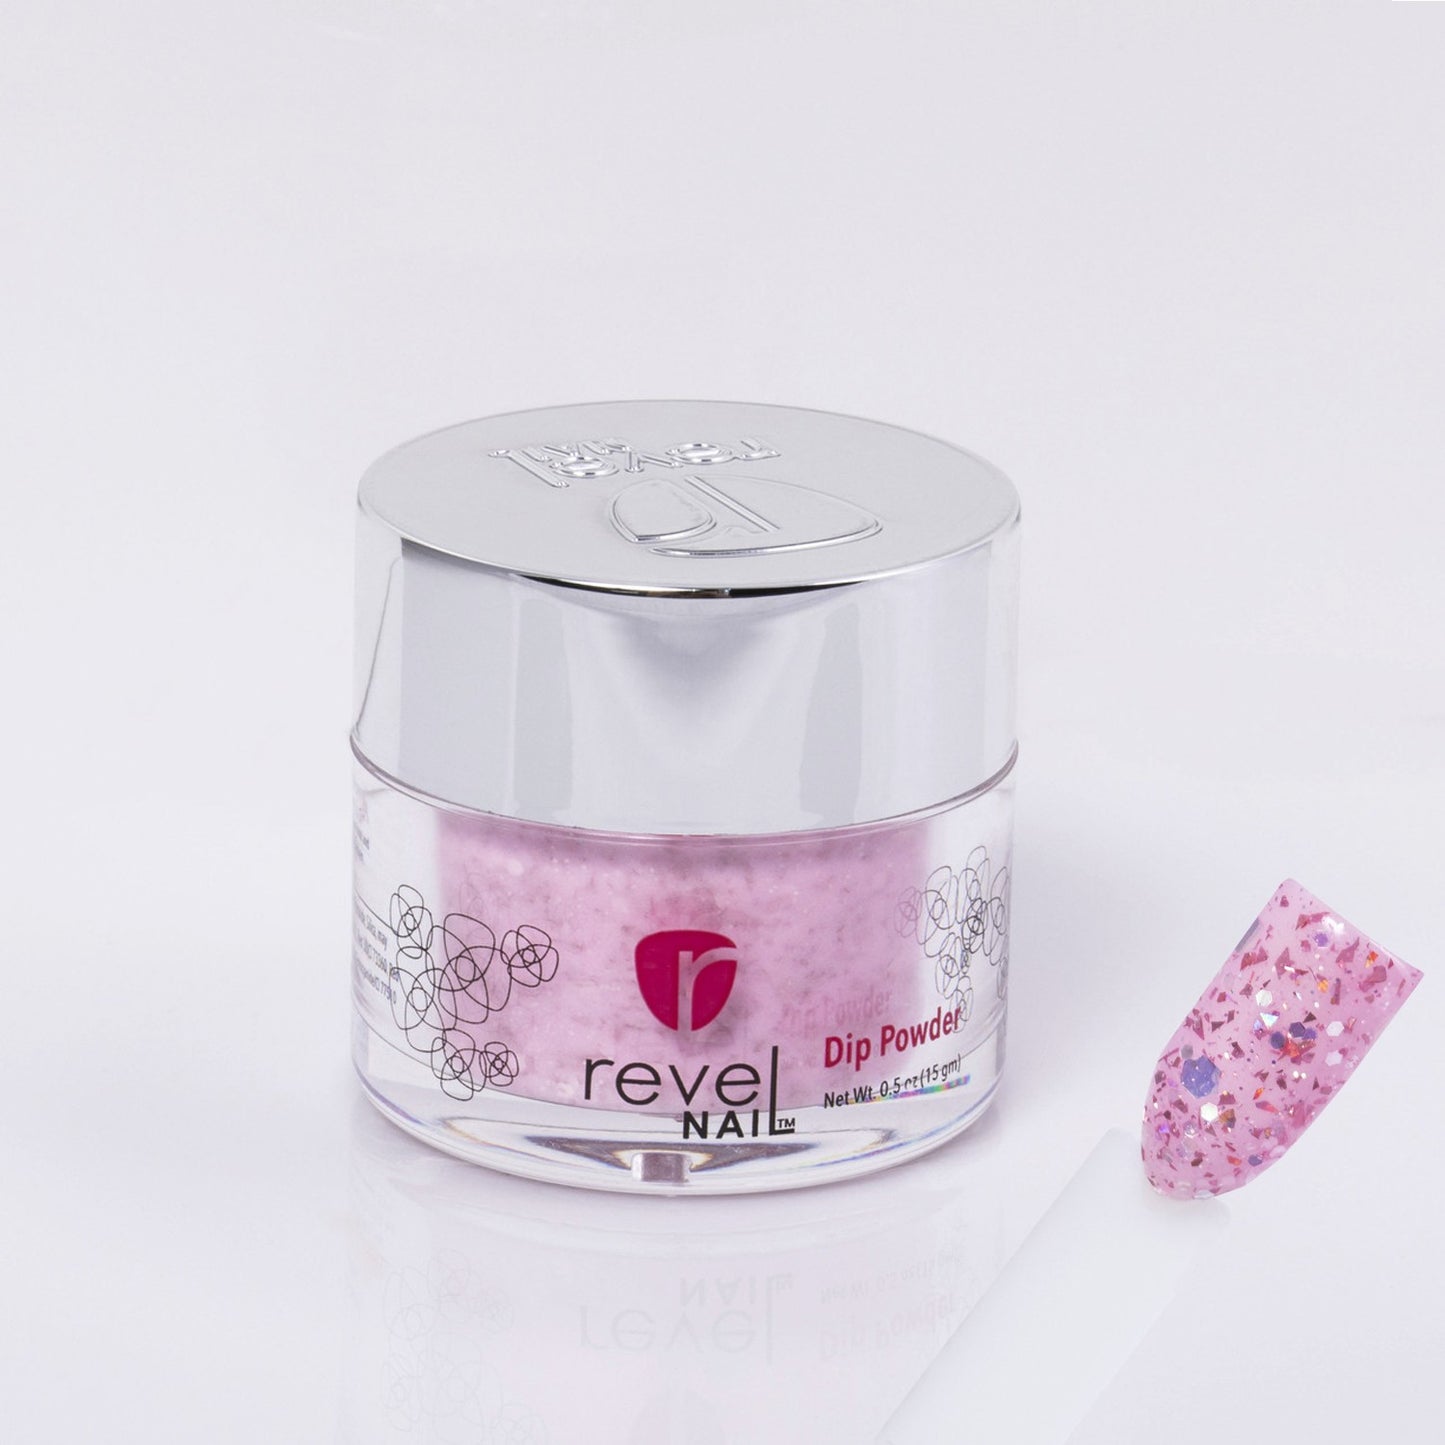 Revel Nail - Dip Powder -  TT3 Rose Quartz - Treasure Trove 29g